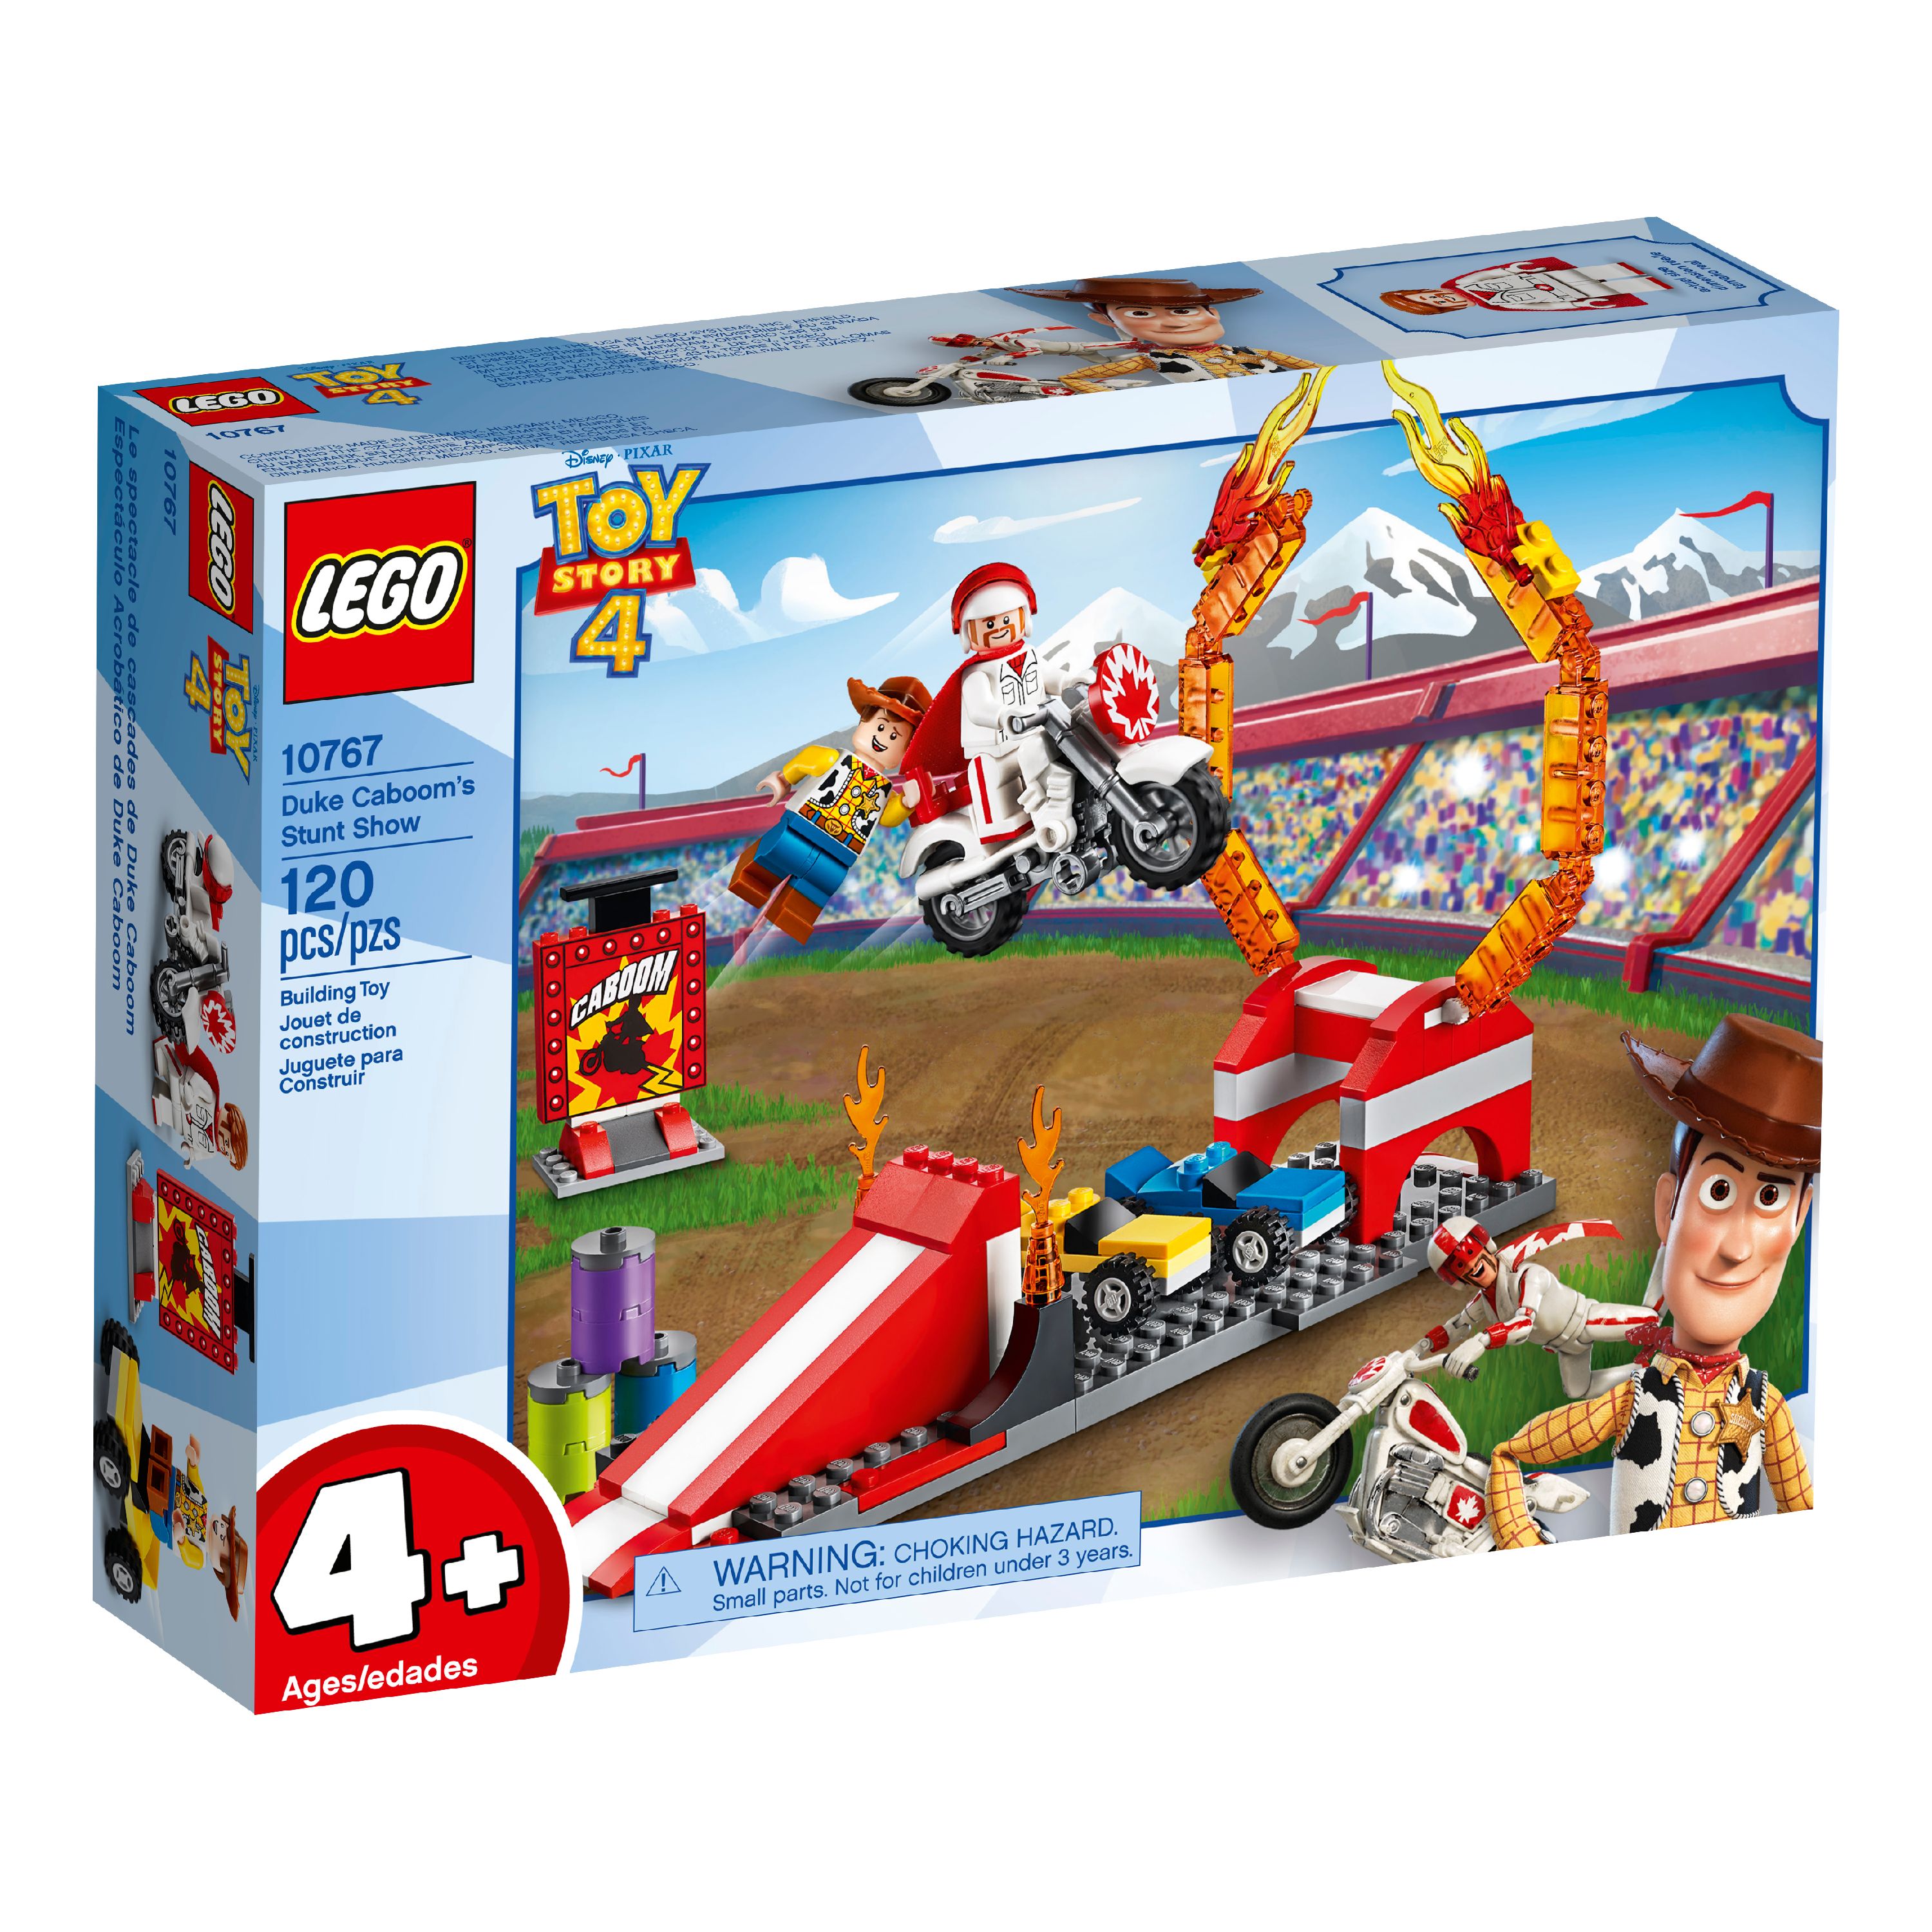 LEGO 4+ Toy Story 4 Duke Caboom'S Stunt Show 10767 - image 4 of 7